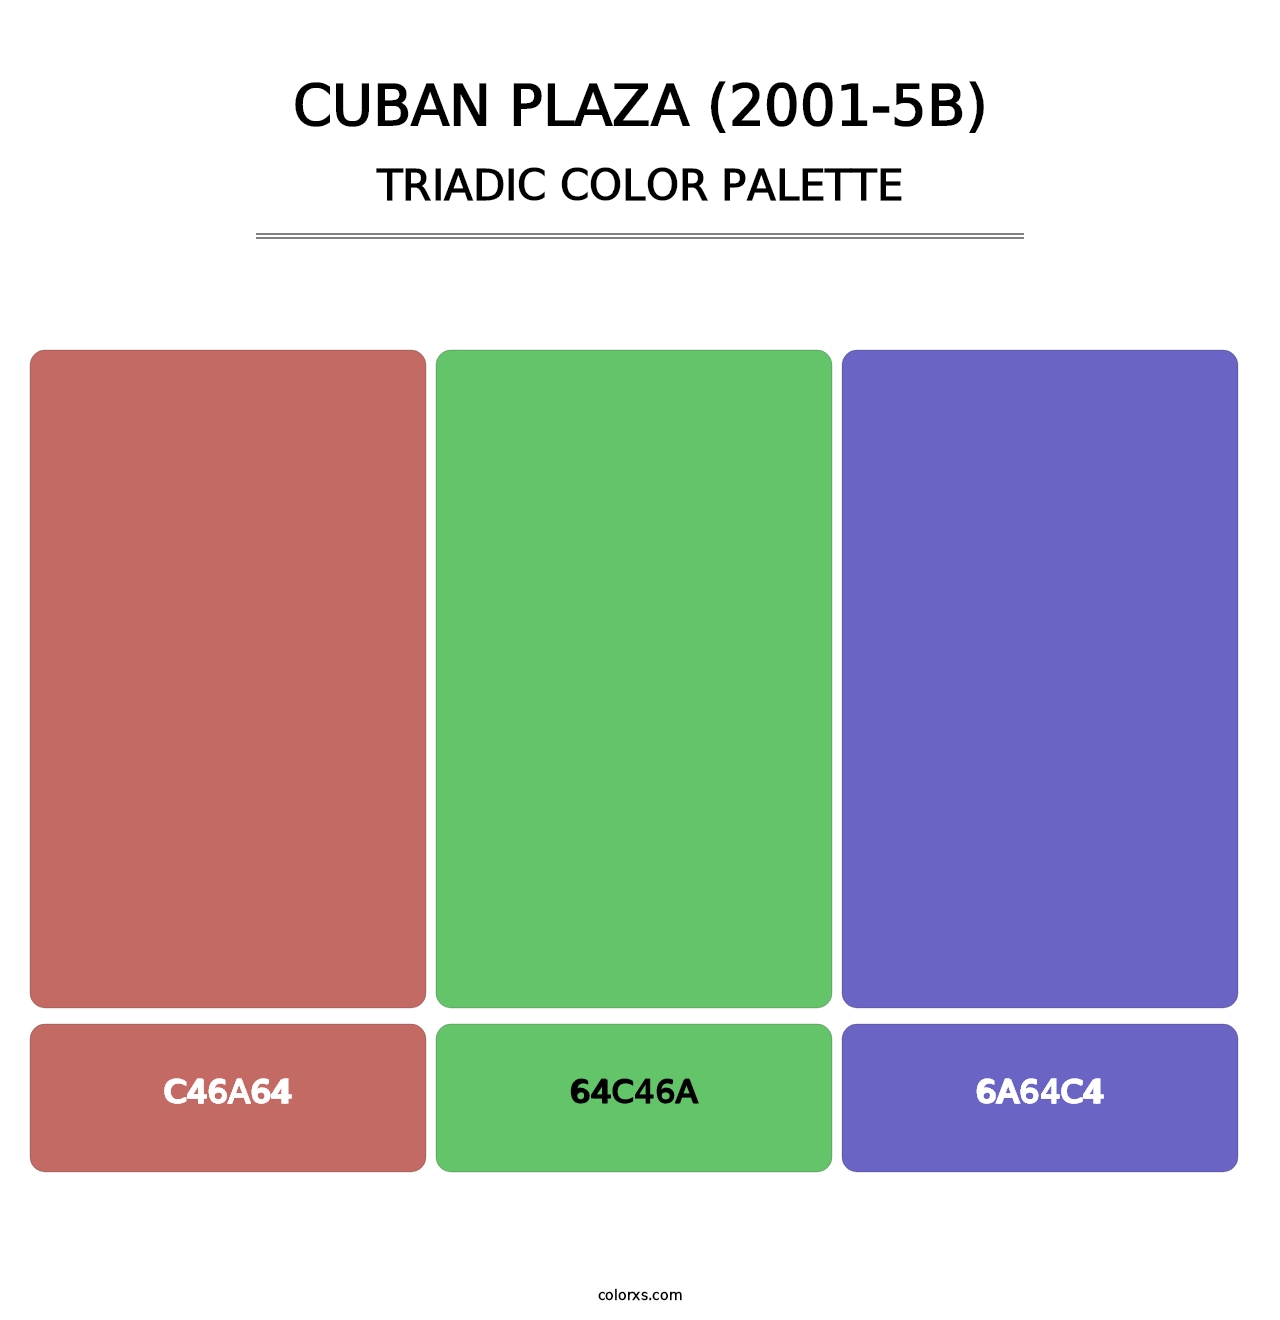 Cuban Plaza (2001-5B) - Triadic Color Palette